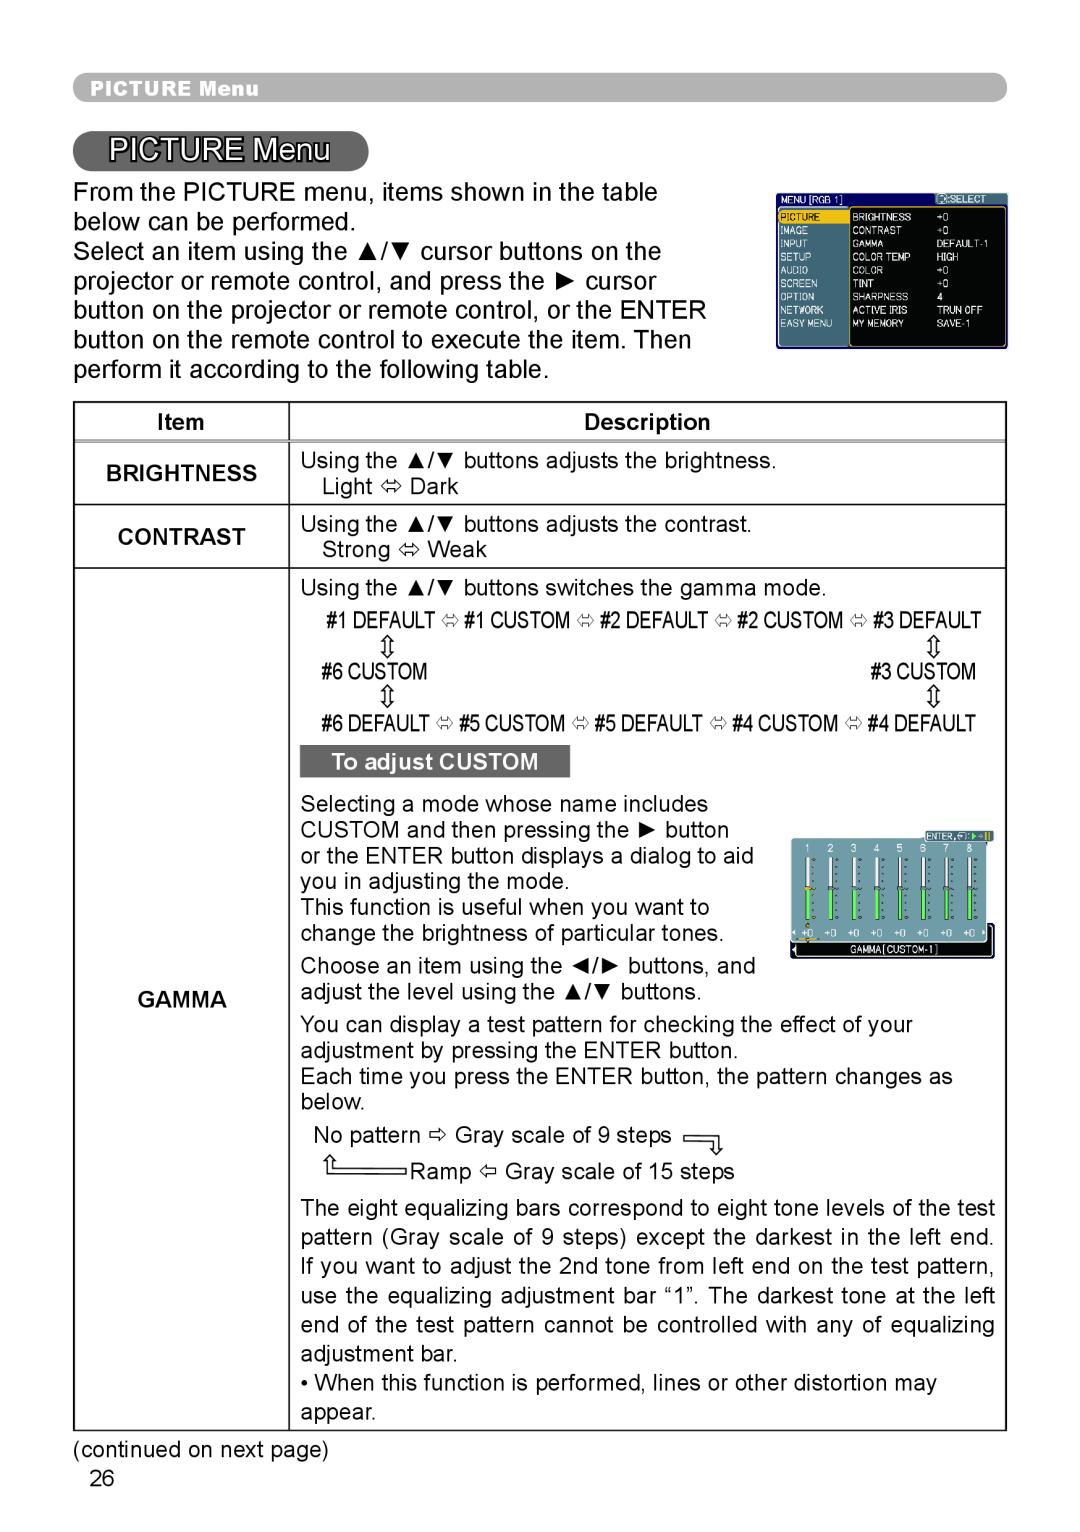 Planar PR9020 user manual PICTURE Menu, Description, Brightness, Contrast, To adjust CUSTOM, Gamma 